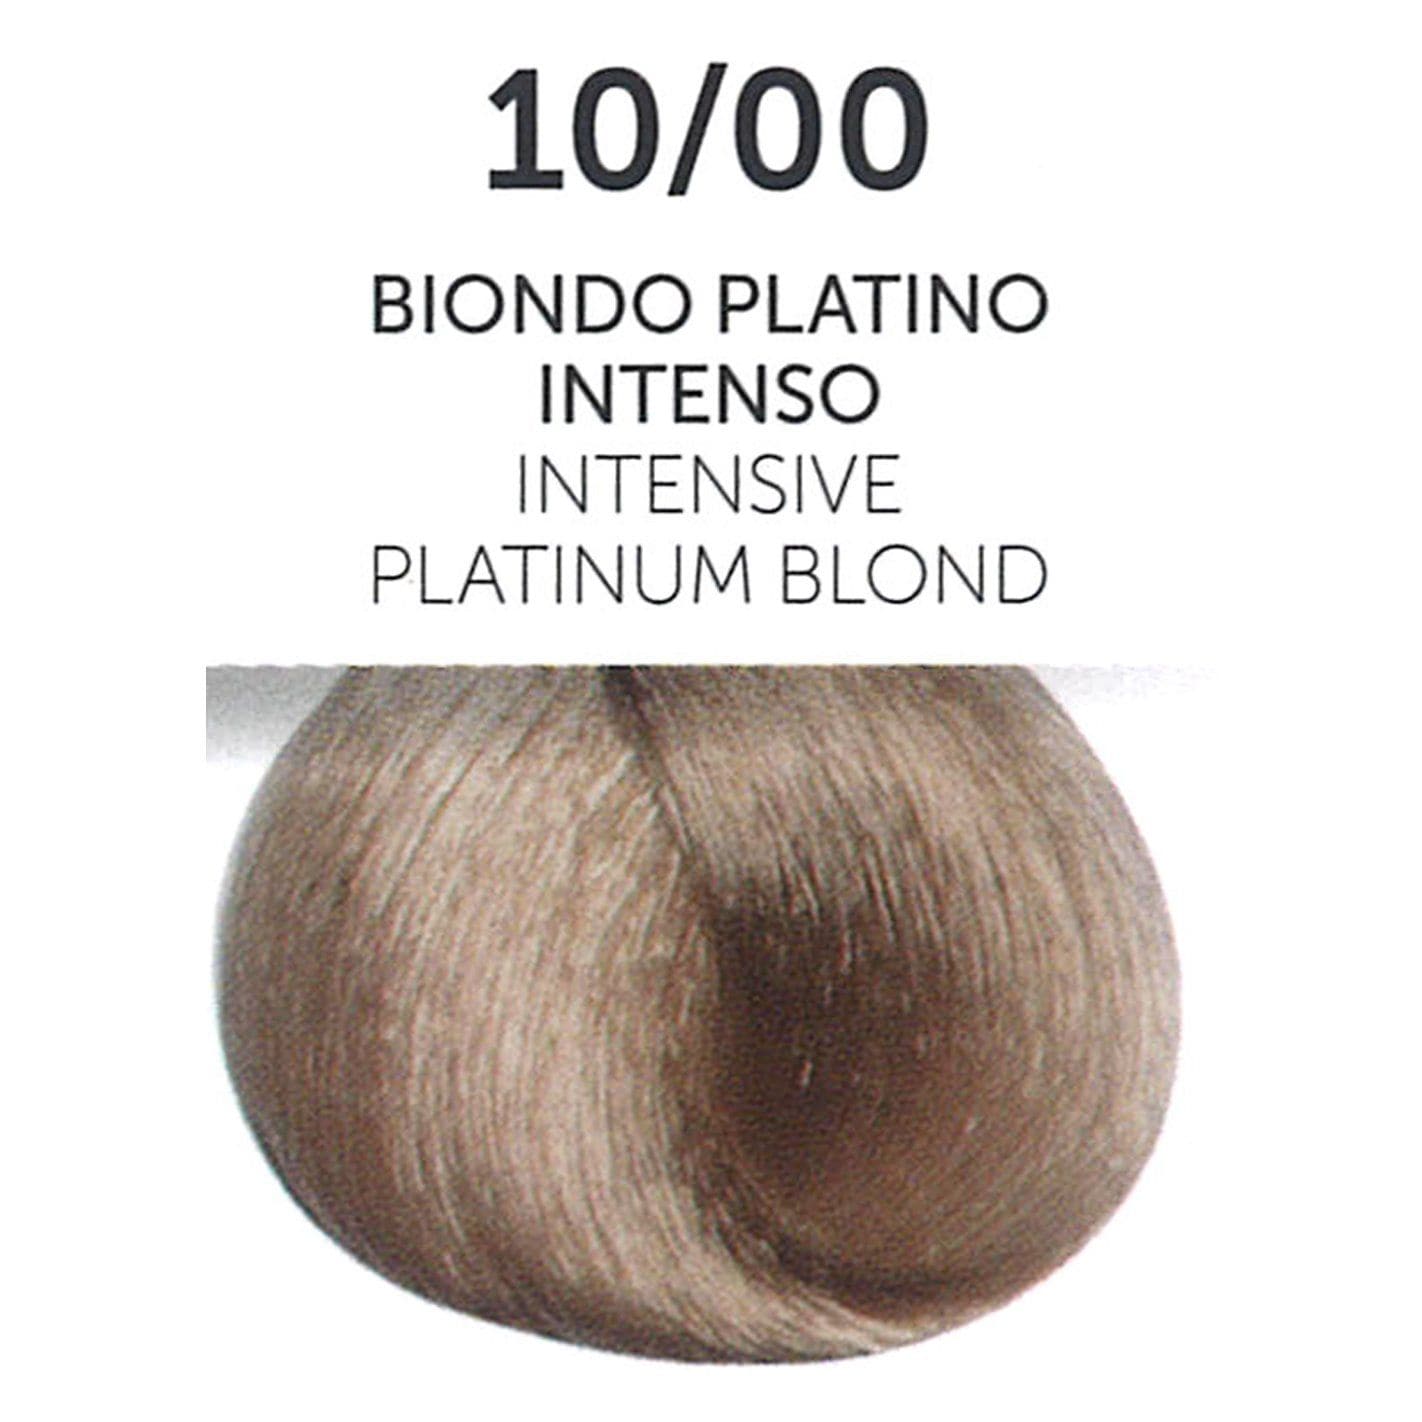 10/00 Intensive Platinum Blonde | Permanent Hair Color | Perlacolor HAIR COLOR OYSTER 